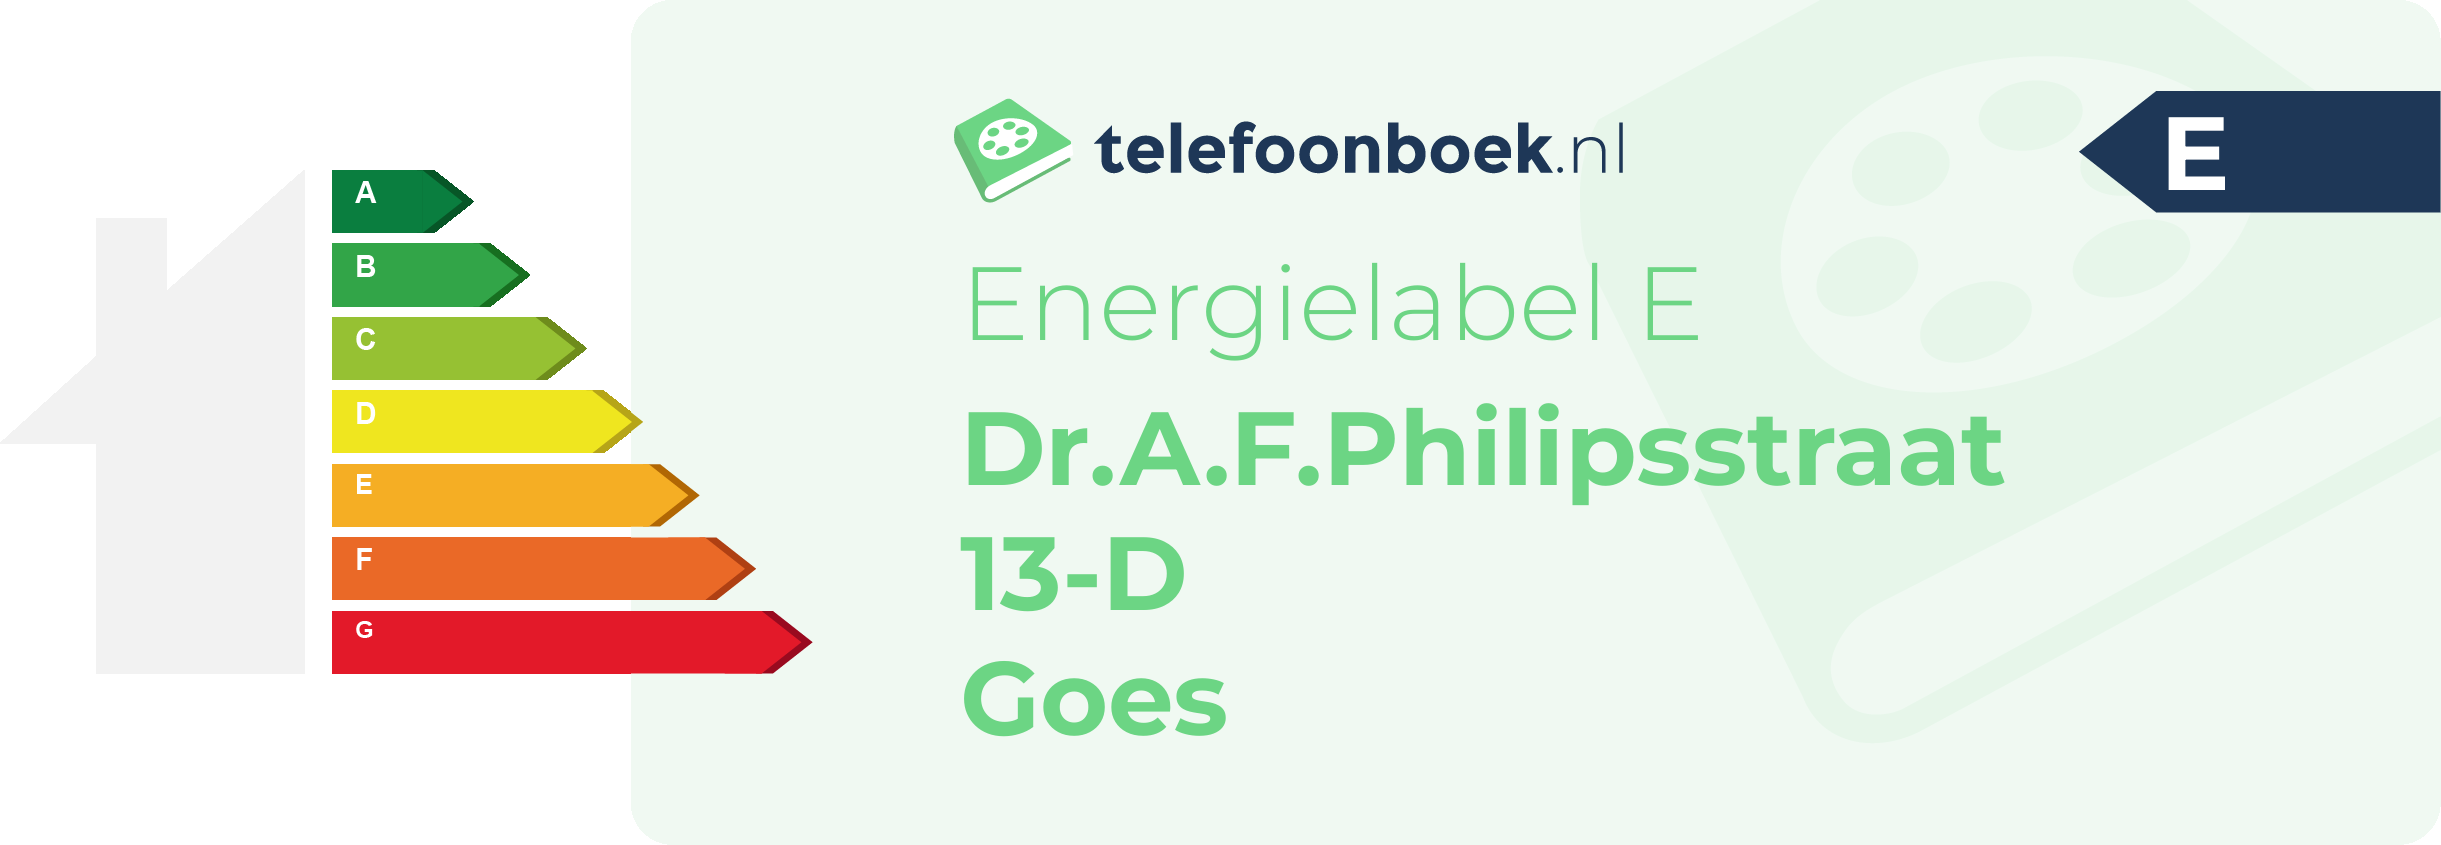 Energielabel Dr.A.F.Philipsstraat 13-D Goes